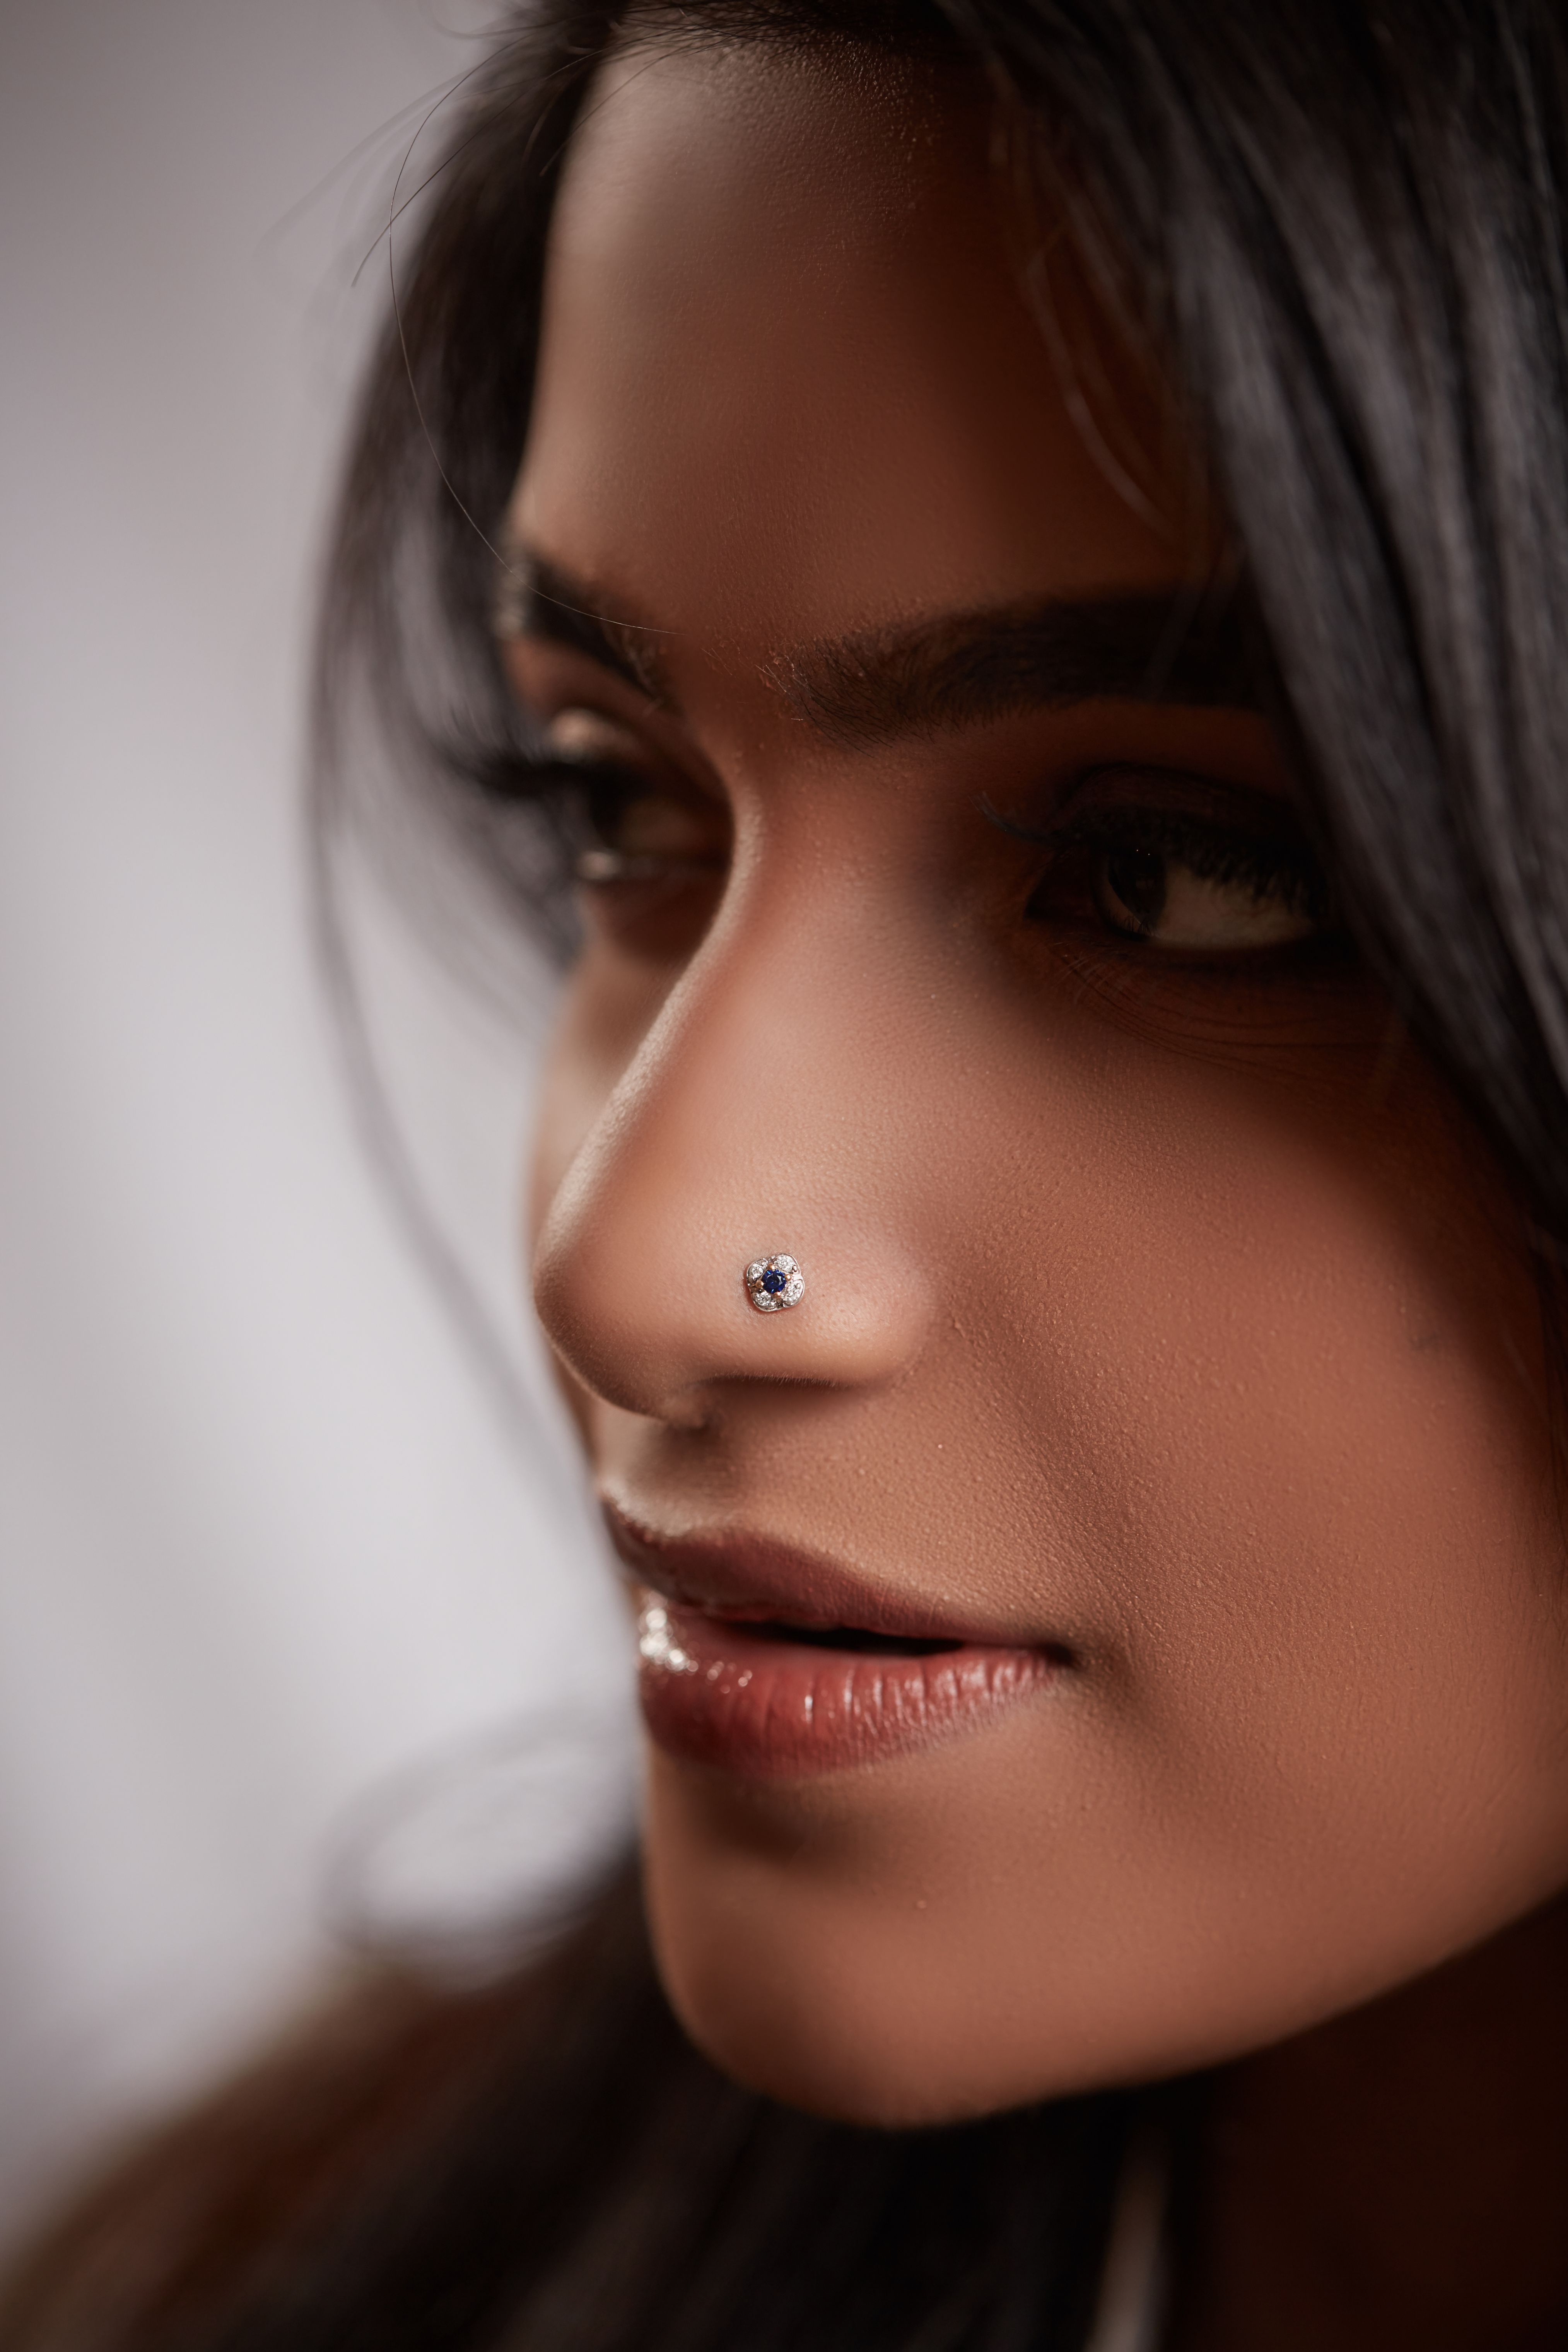 Pin by Manisha K on शायराना Hindi shayri | Nose ring, Septum ring, Rings